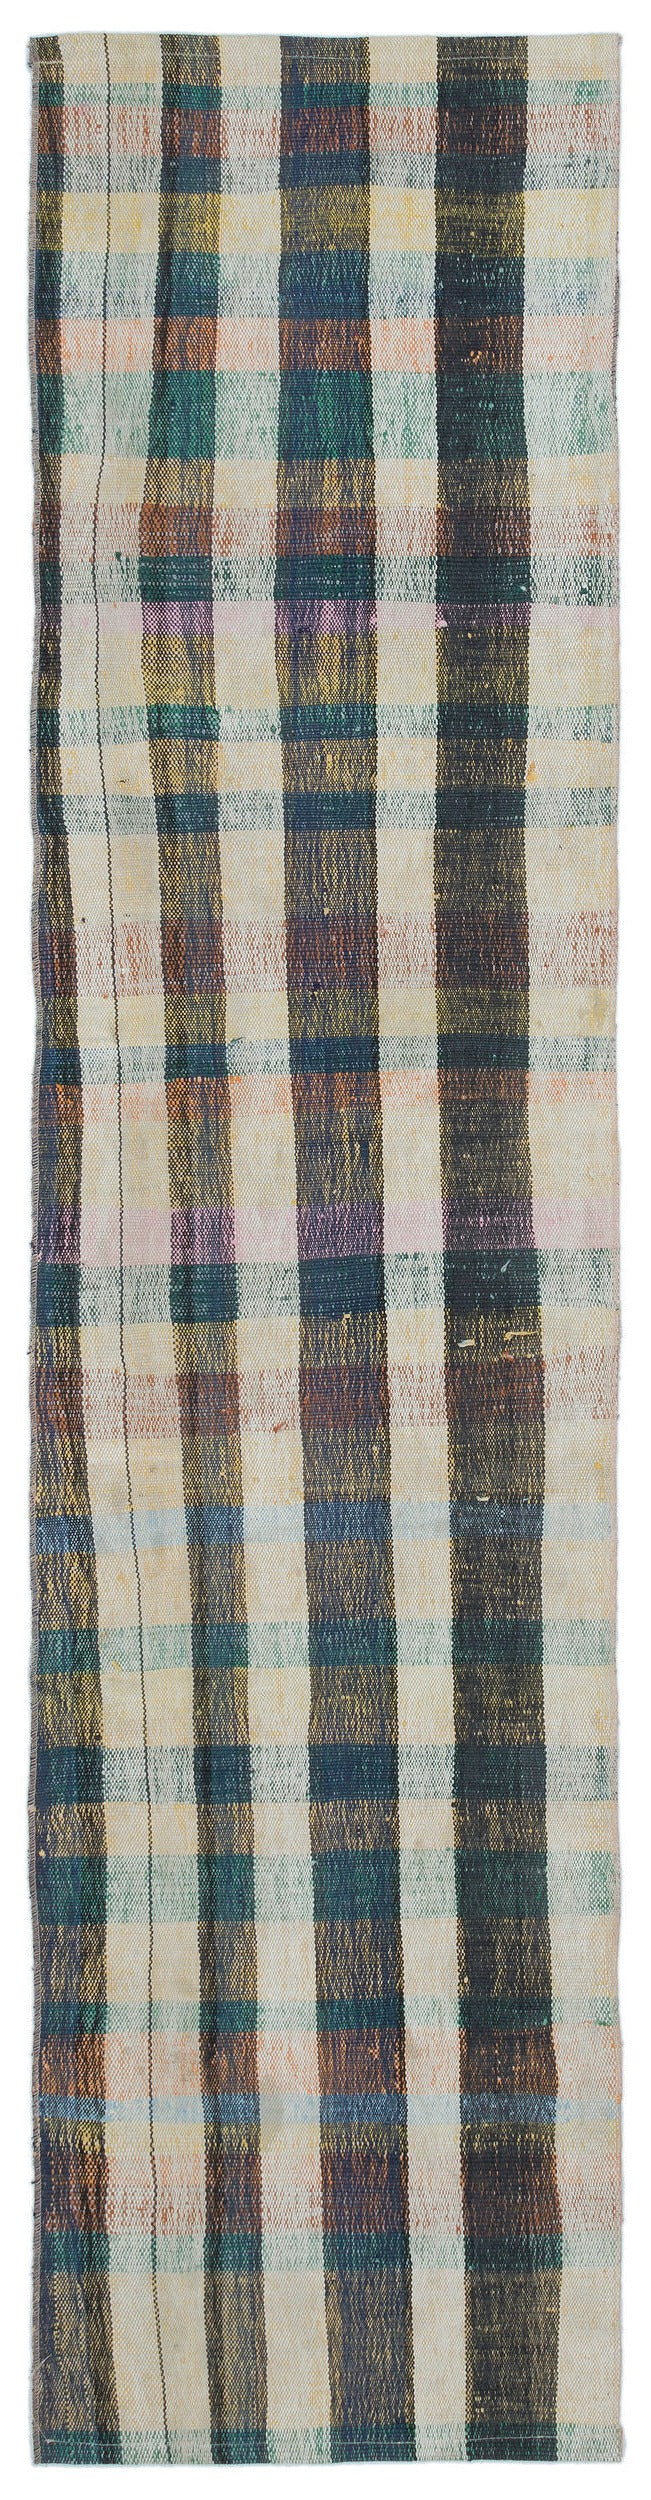 Cretan Beige Striped Wool Hand Woven Carpet 057 x 232